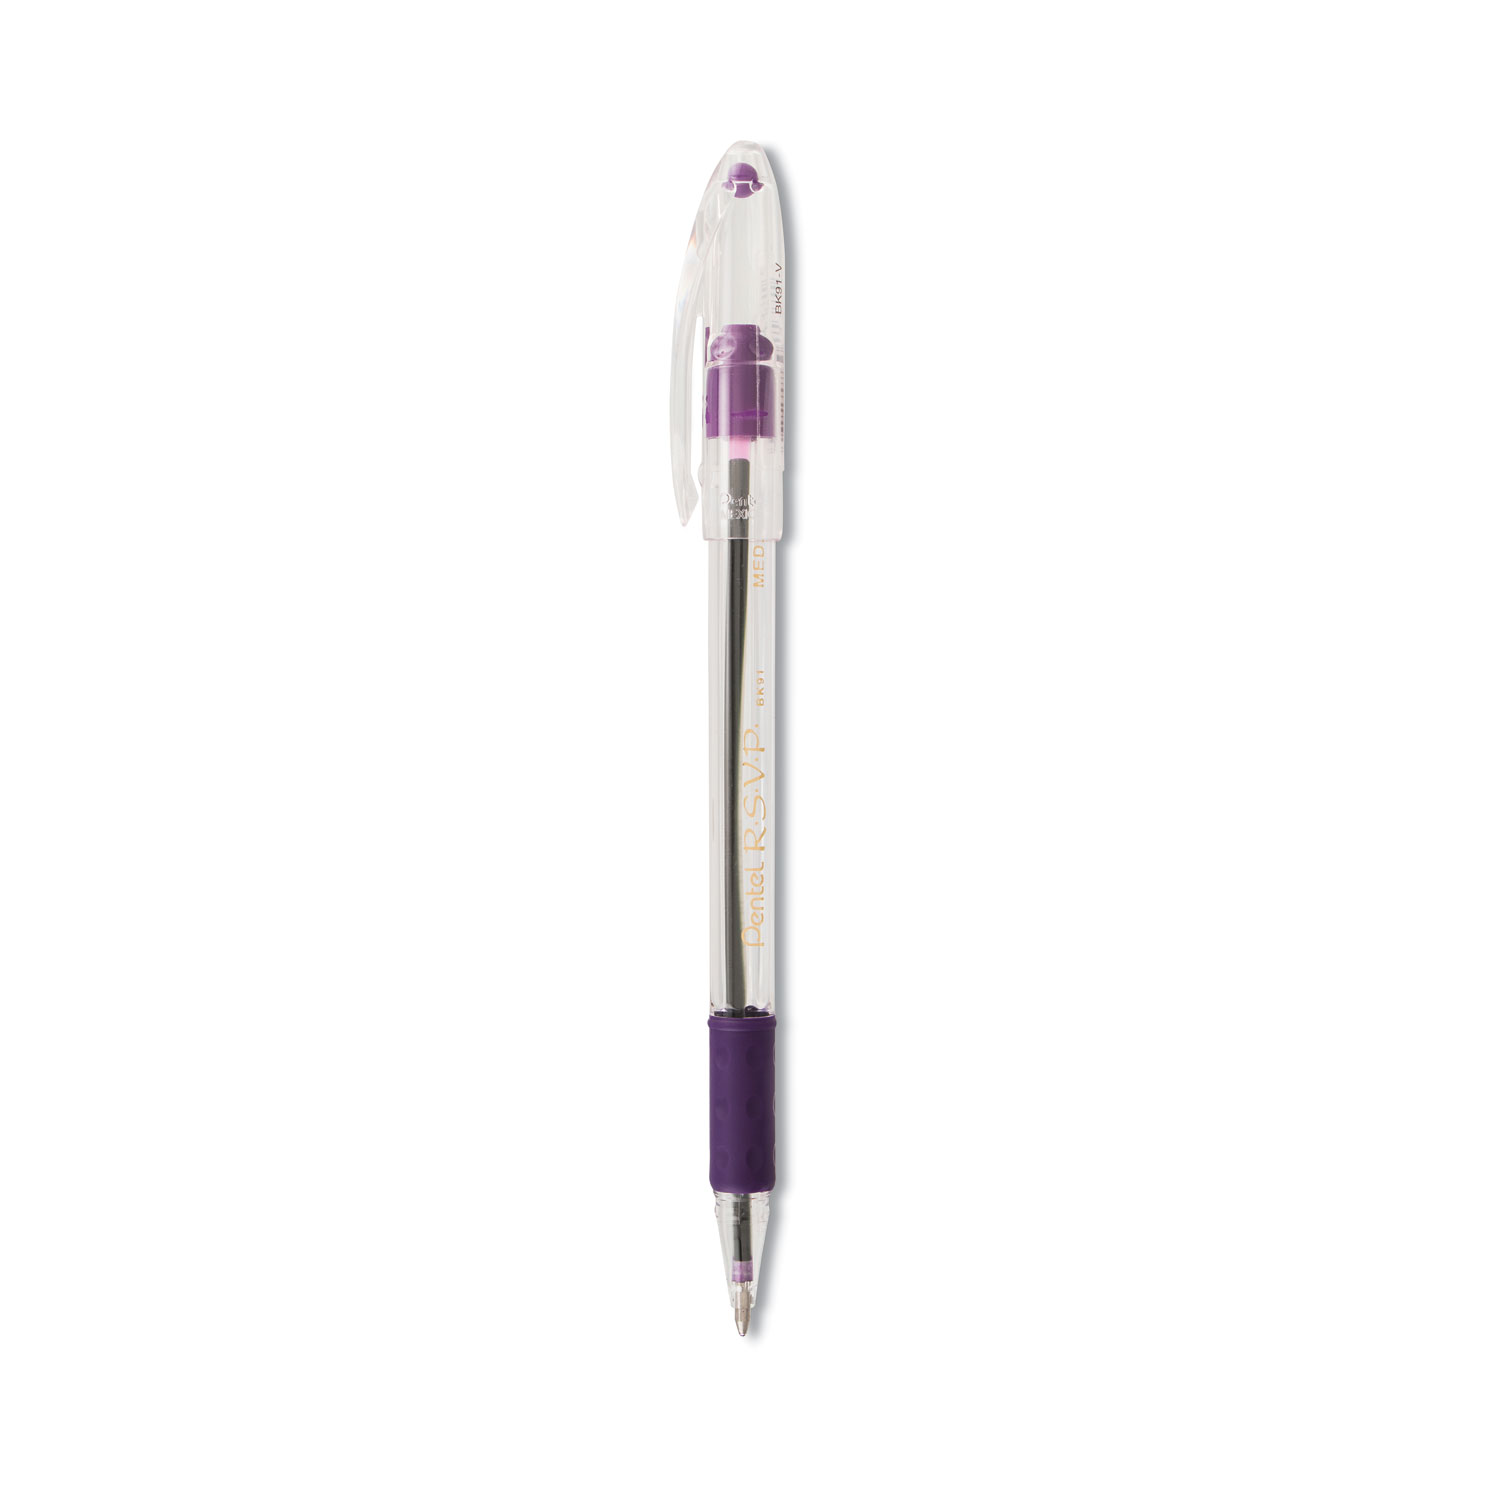  Pentel BK91V R.S.V.P. Stick Ballpoint Pen, Medium 1mm, Violet Ink, Clear/Violet Barrel, Dozen (PENBK91V) 